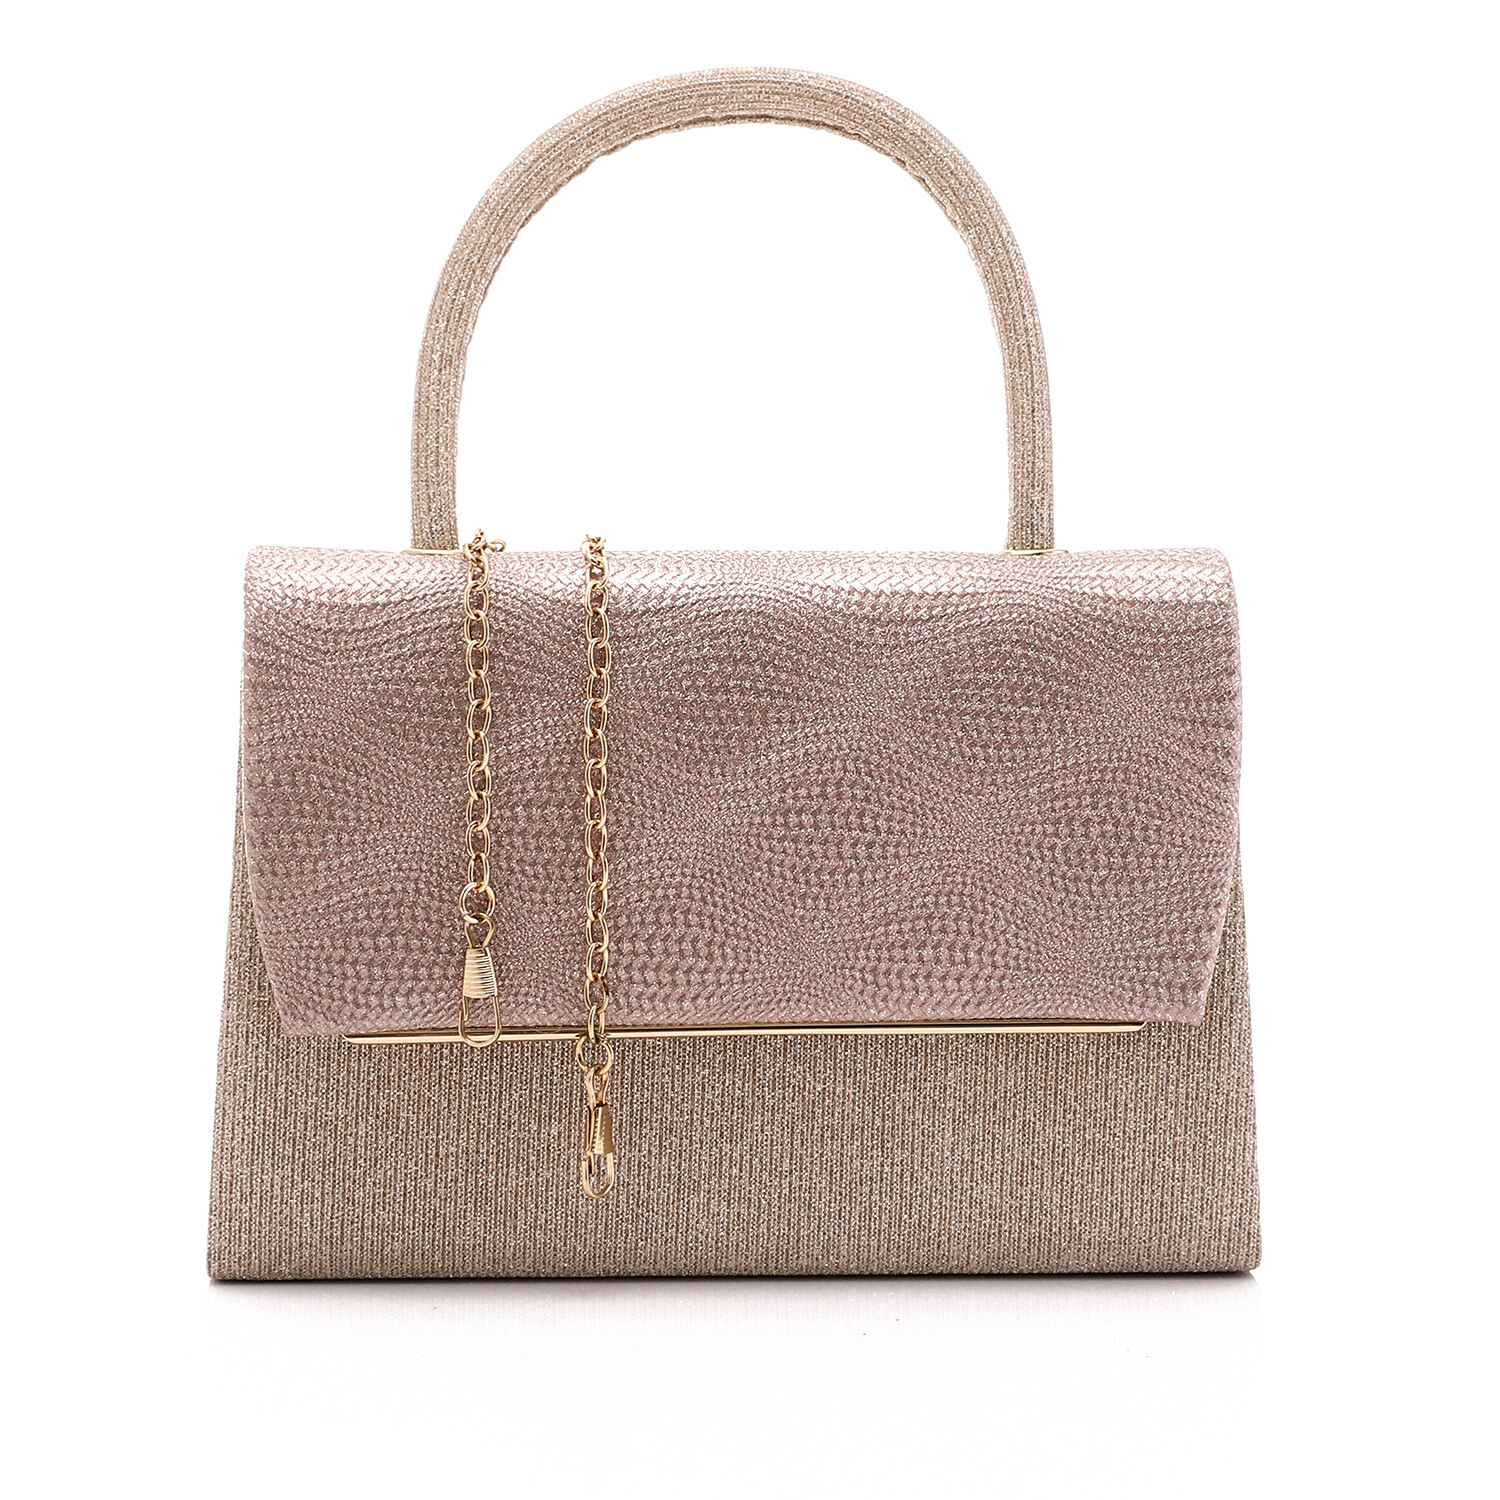 One Main Compartment Glittery Handbag - Rose gold 4991